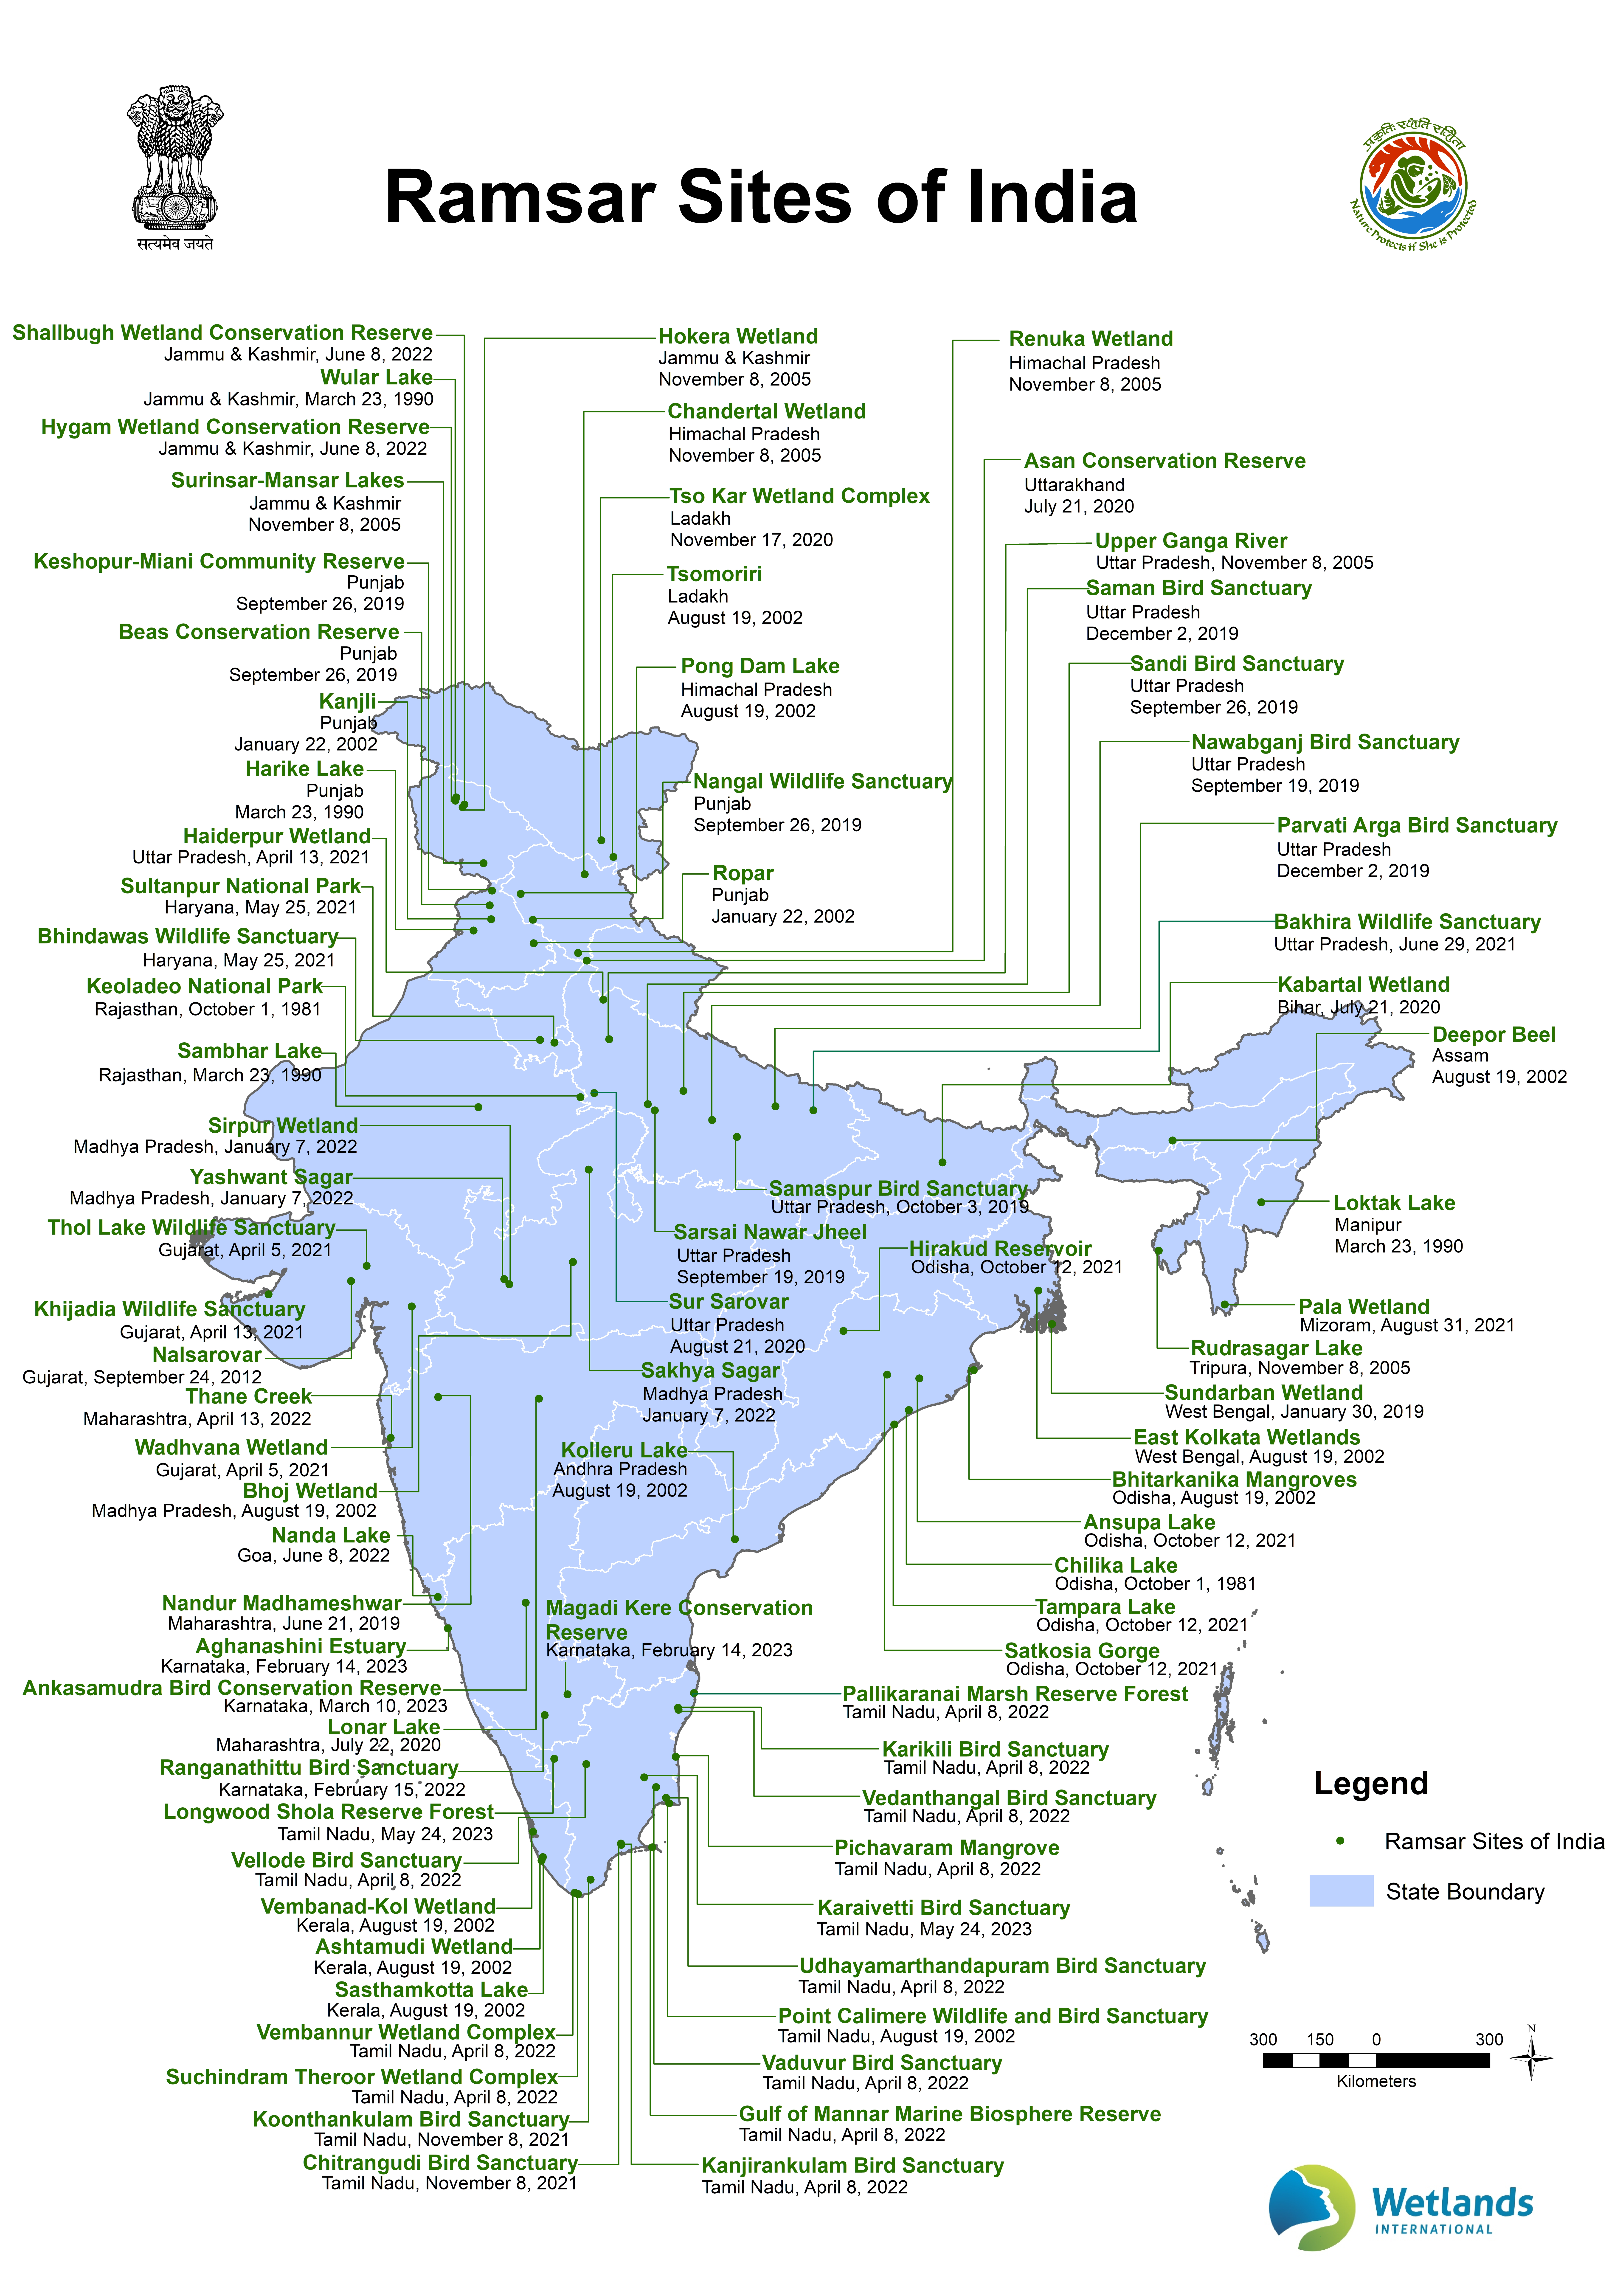 Image of Ramsar Sites in India